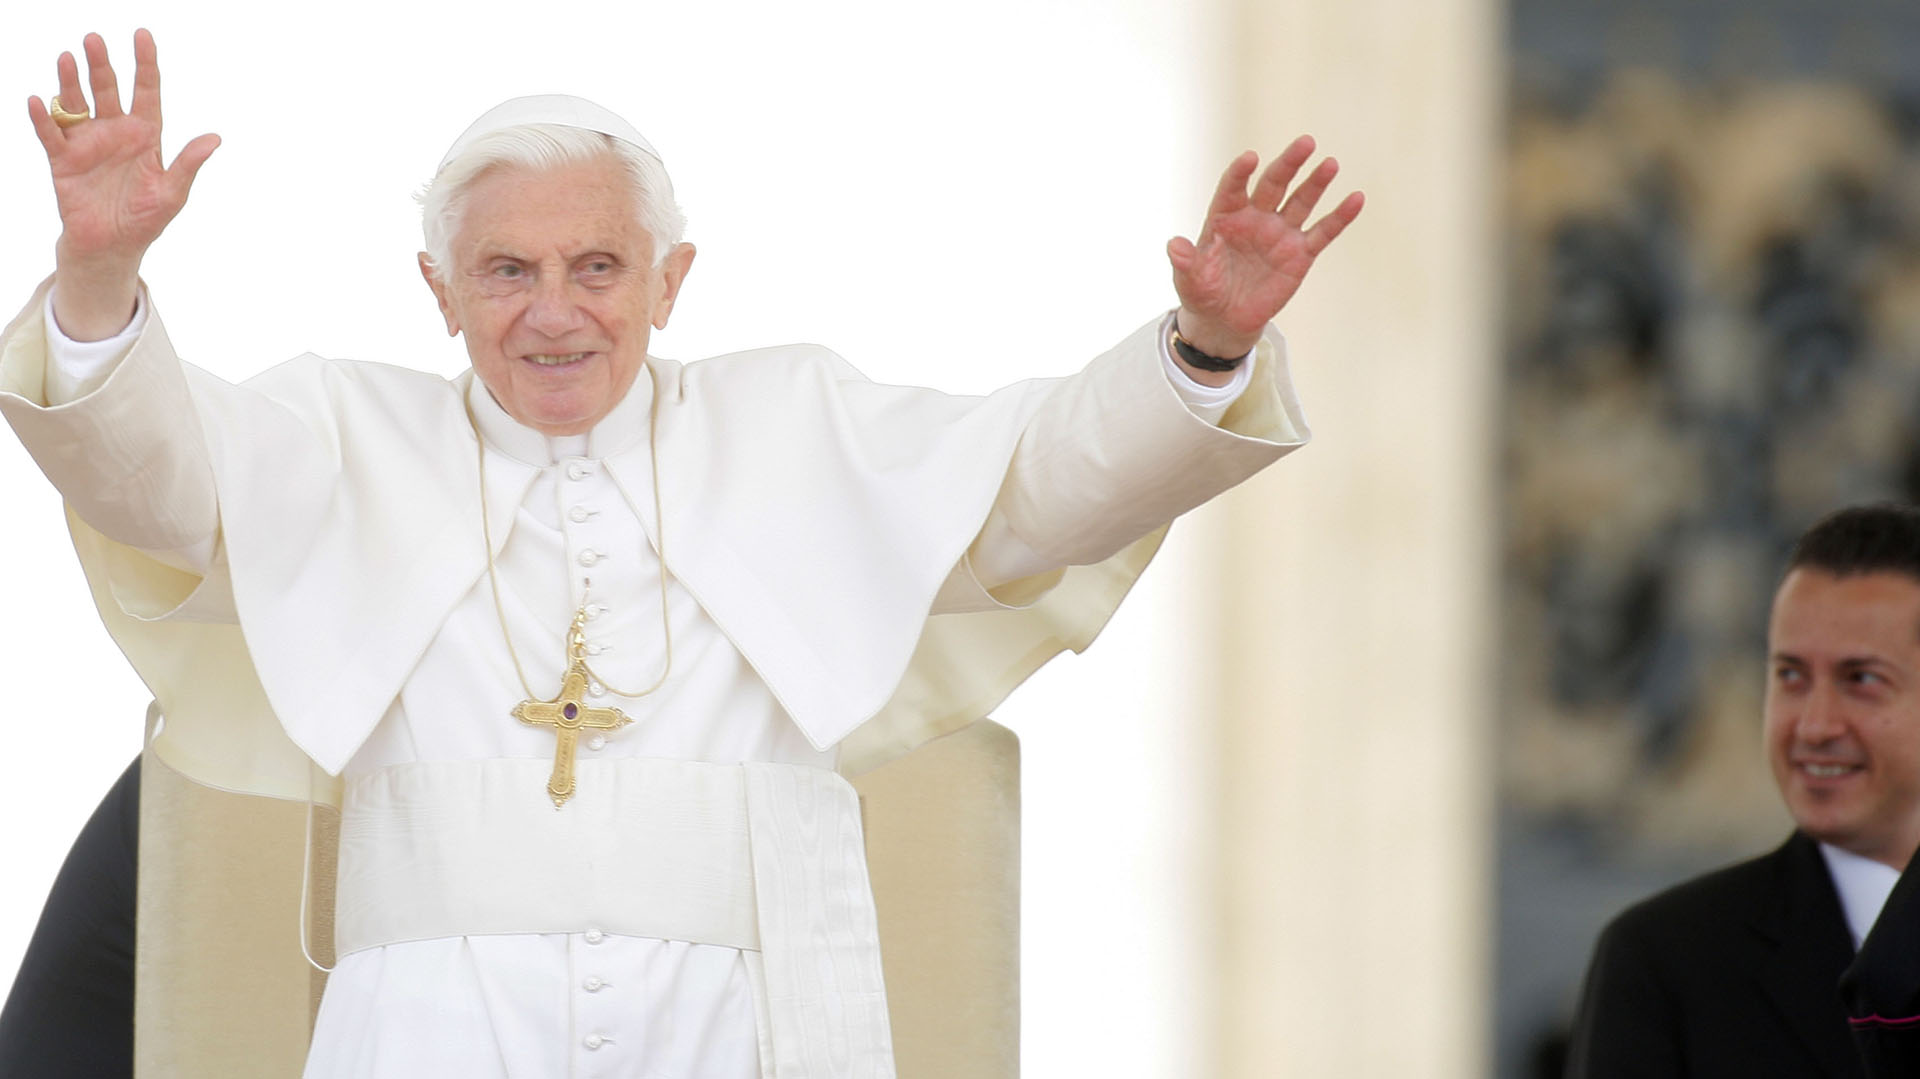 Cuando era Cardenal Josef Ratzinger fue señala de encubrir casos de pedofilia dentro de la Iglesia Católica  (Getty Images)